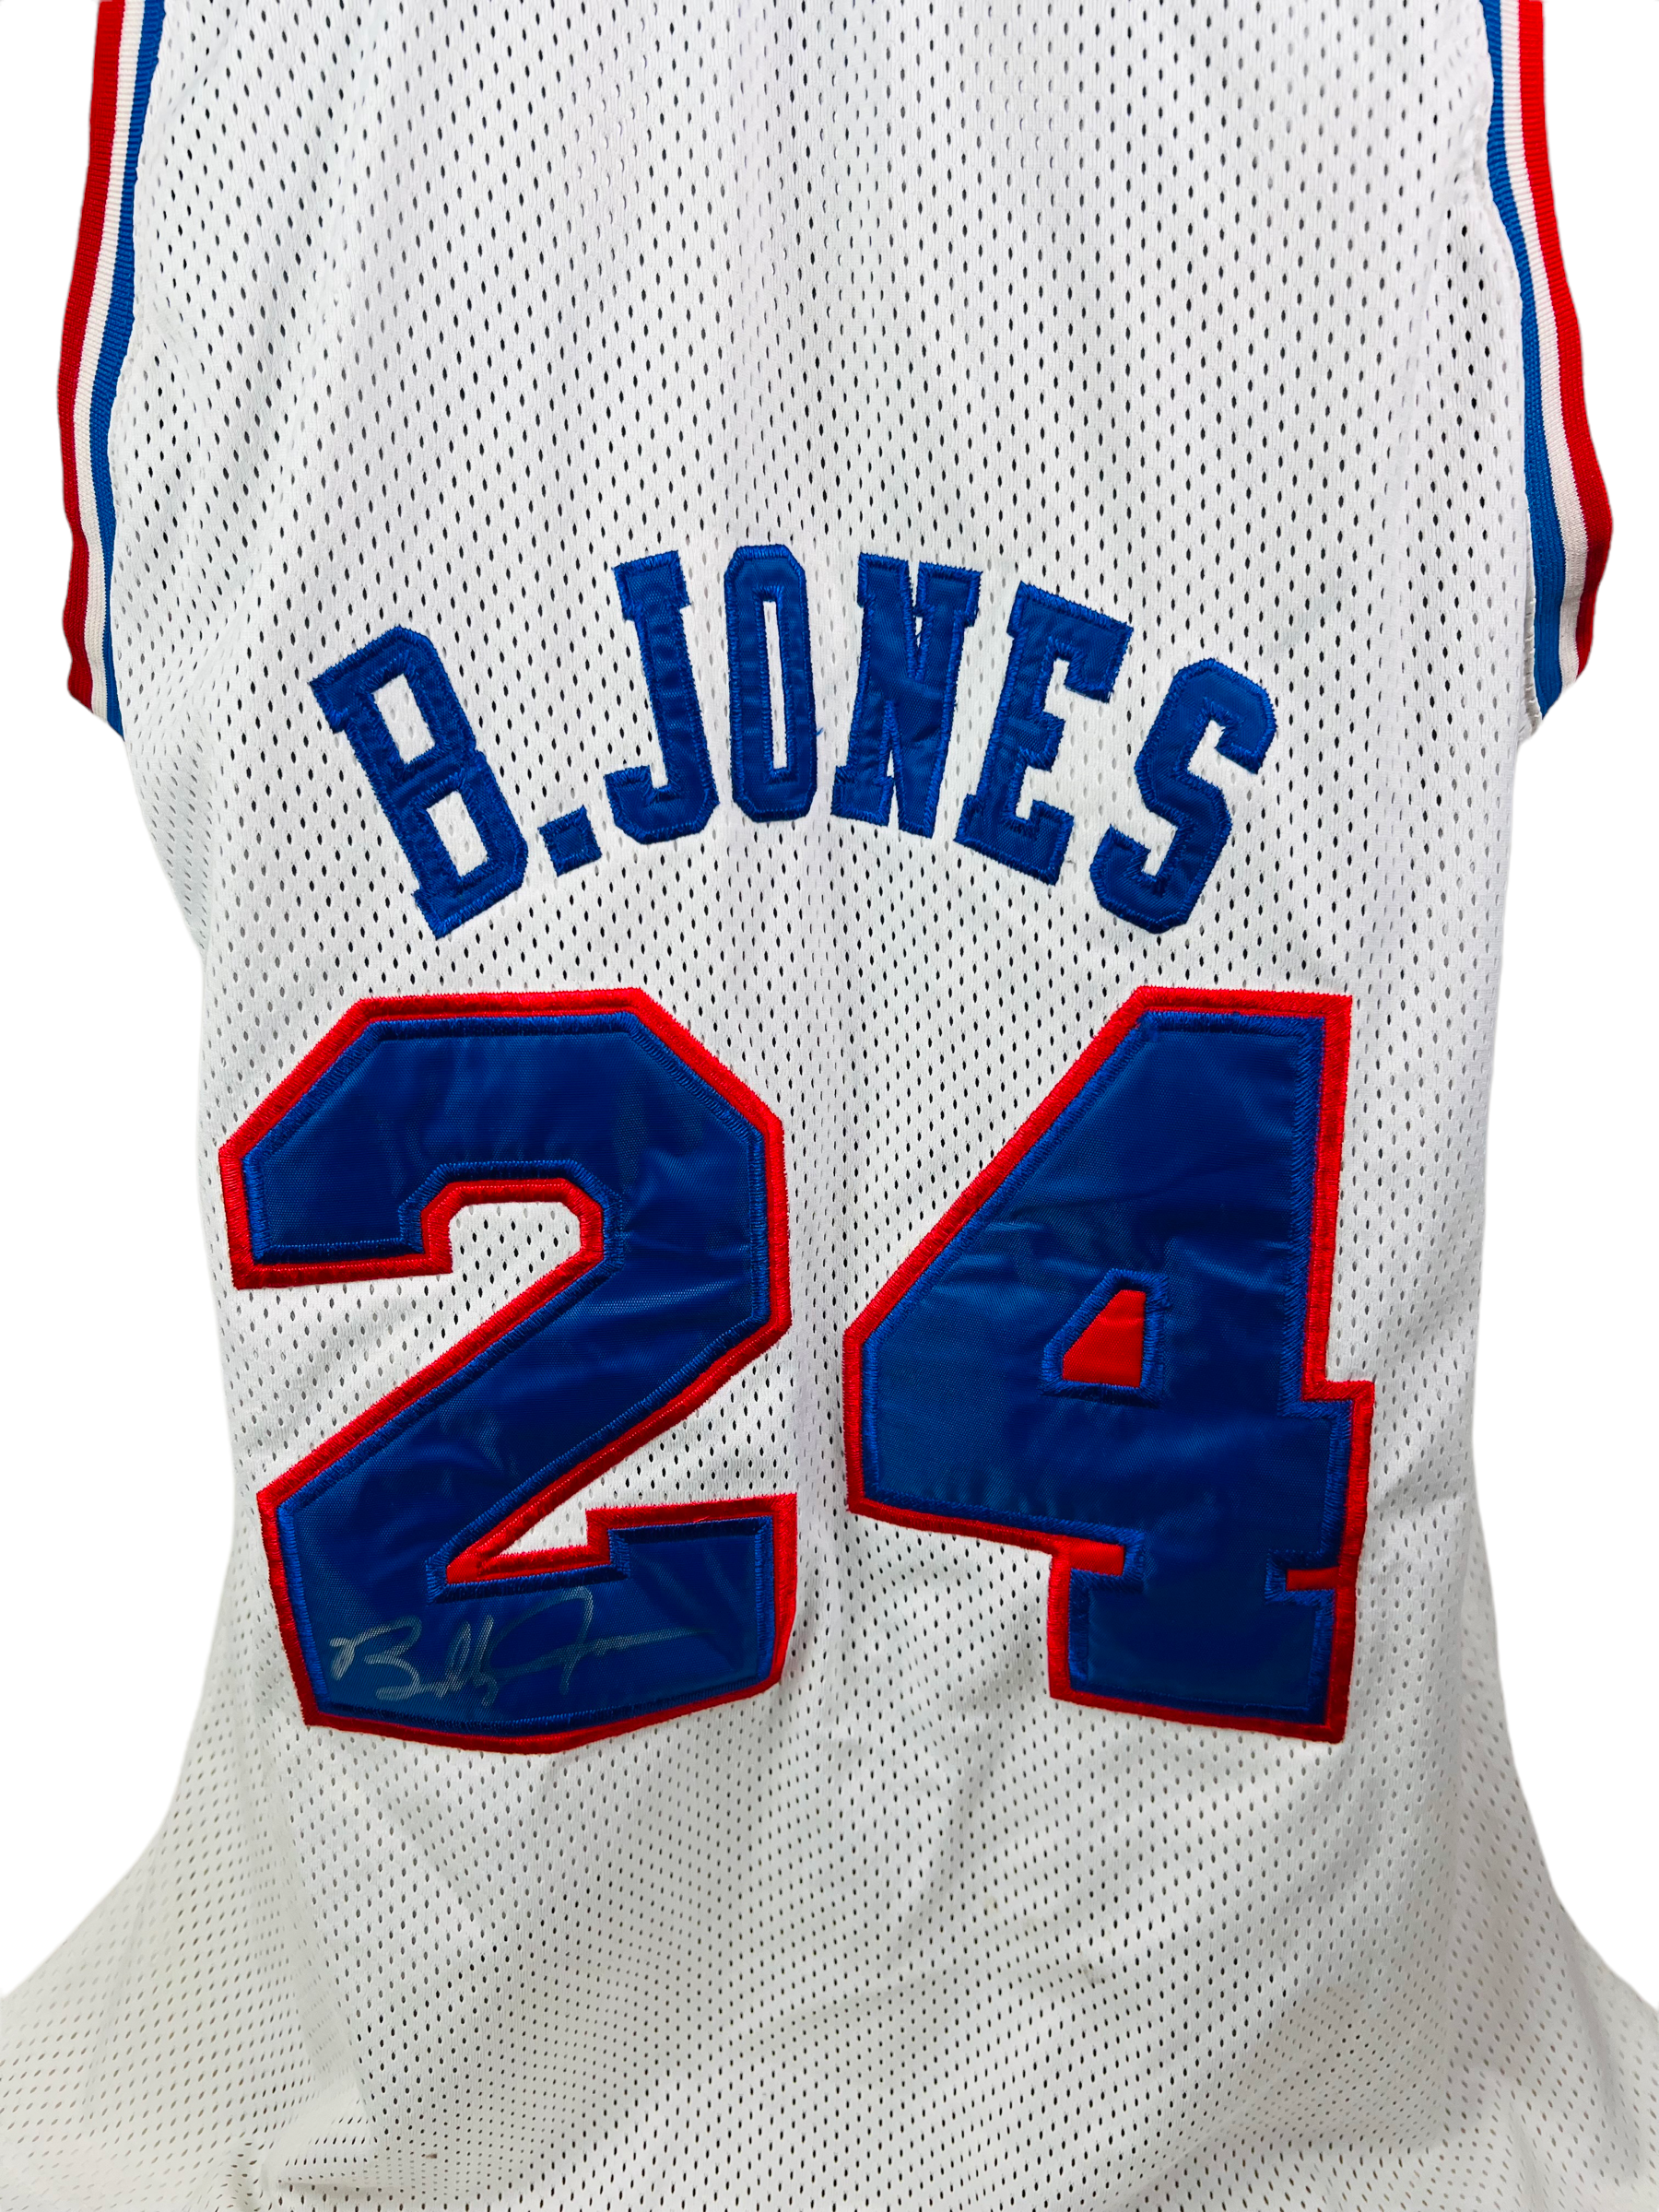 Signed Bobby (Philadelphia 76ers) Jones Jersey - 83 Cha